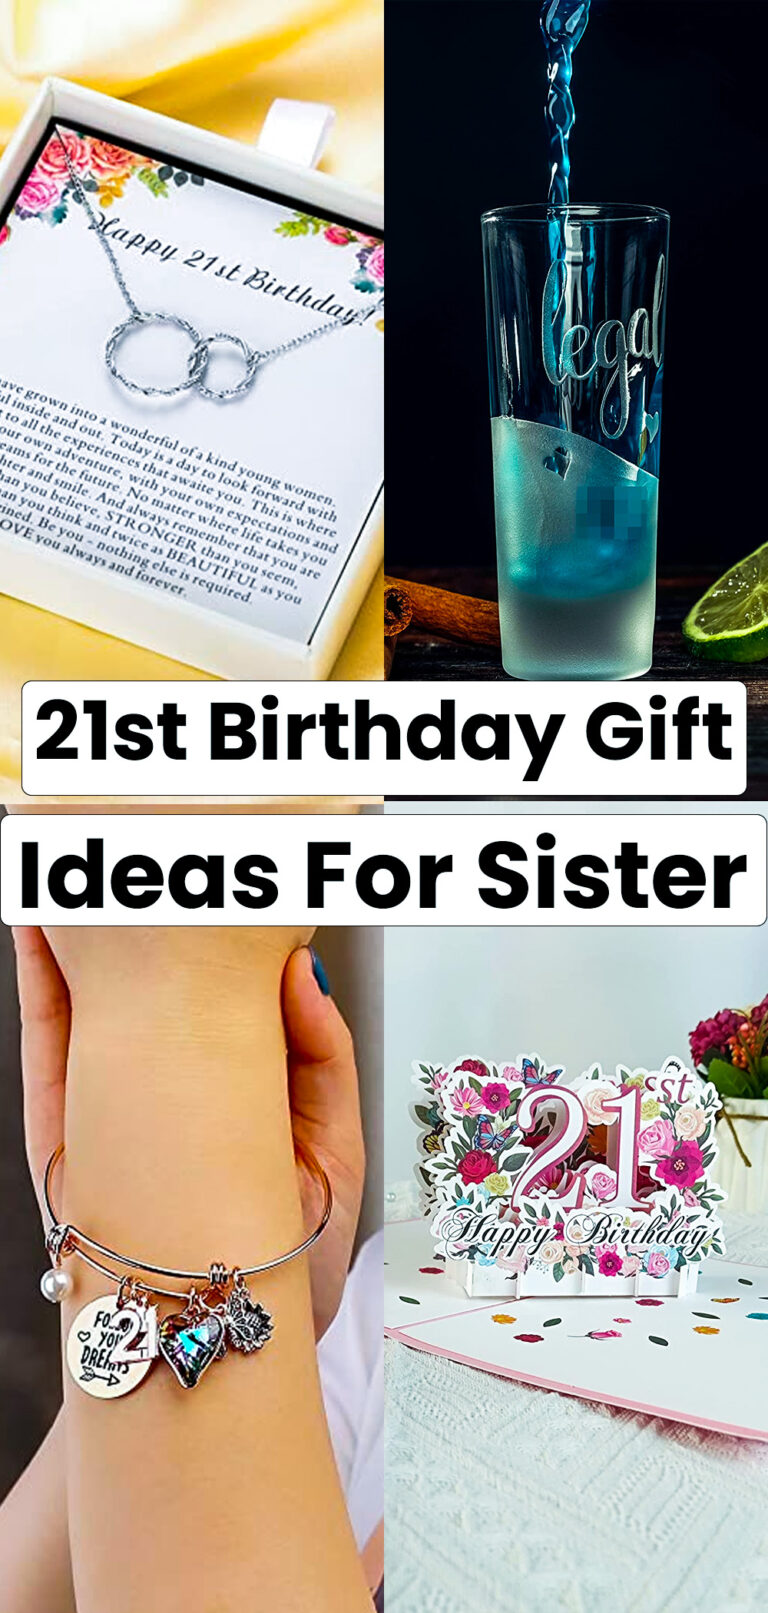 21st Birthday Gift Ideas for Sister